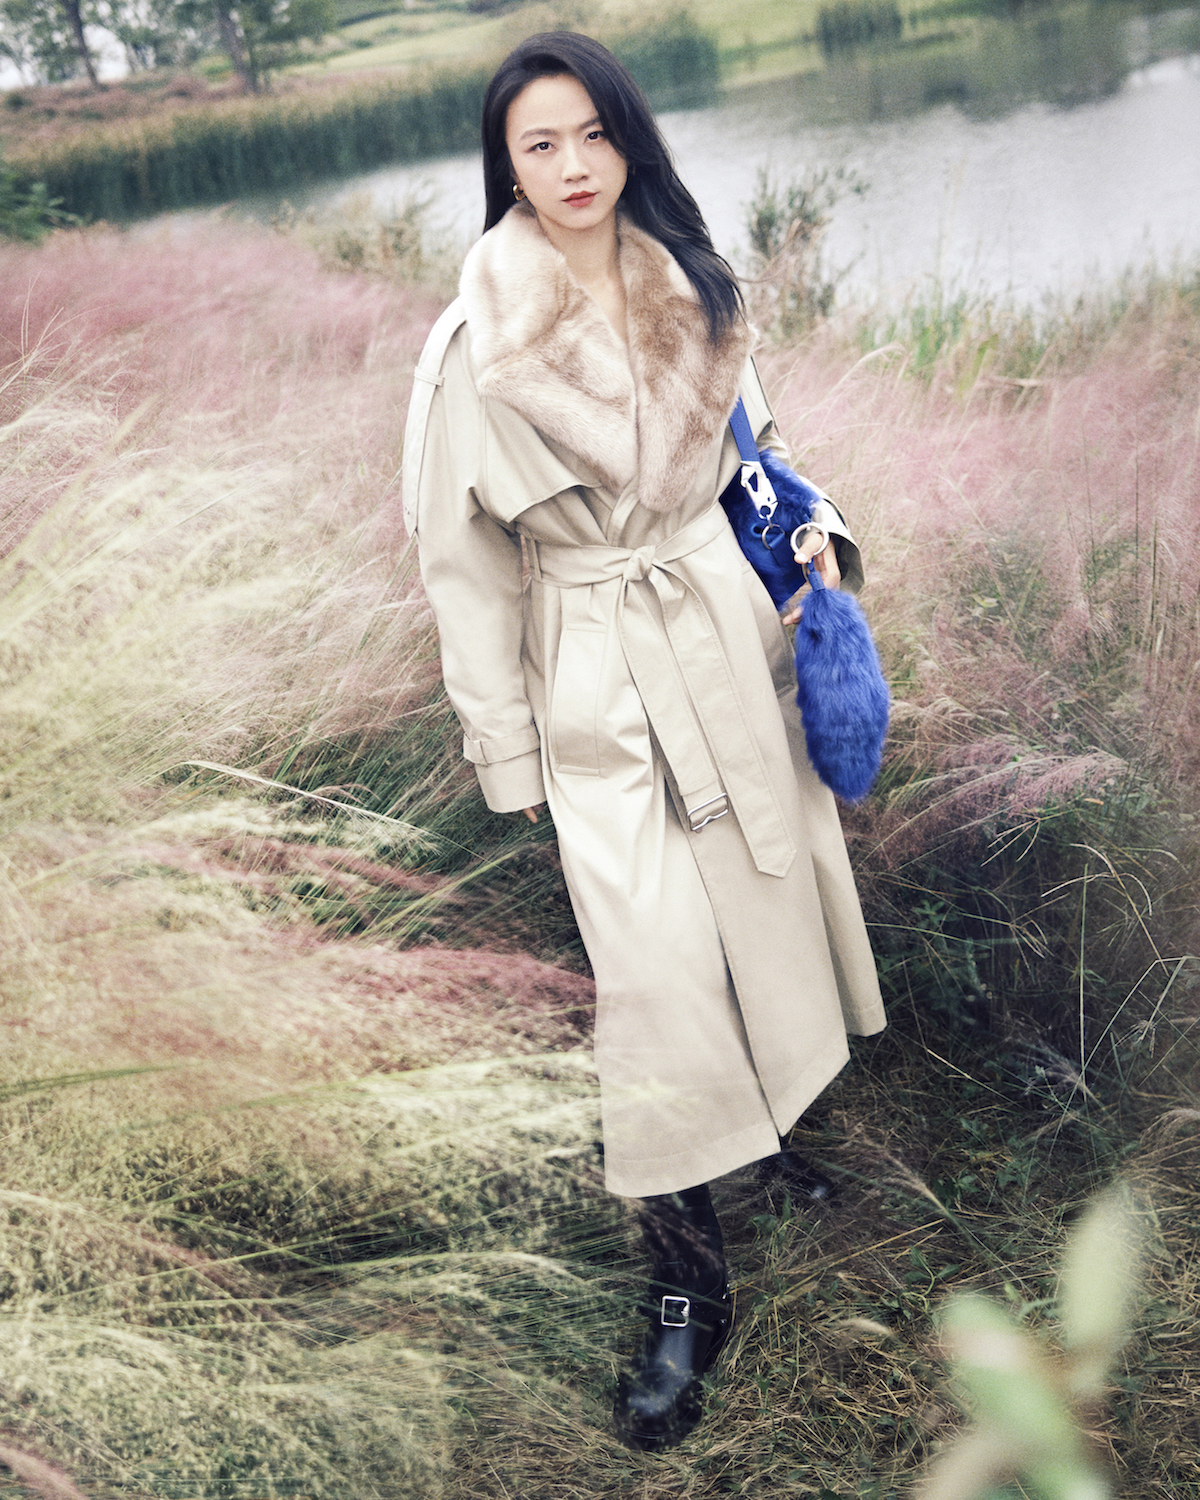 Китайська акторка Тан Вей стала амбасадором Burberry-Фото 1